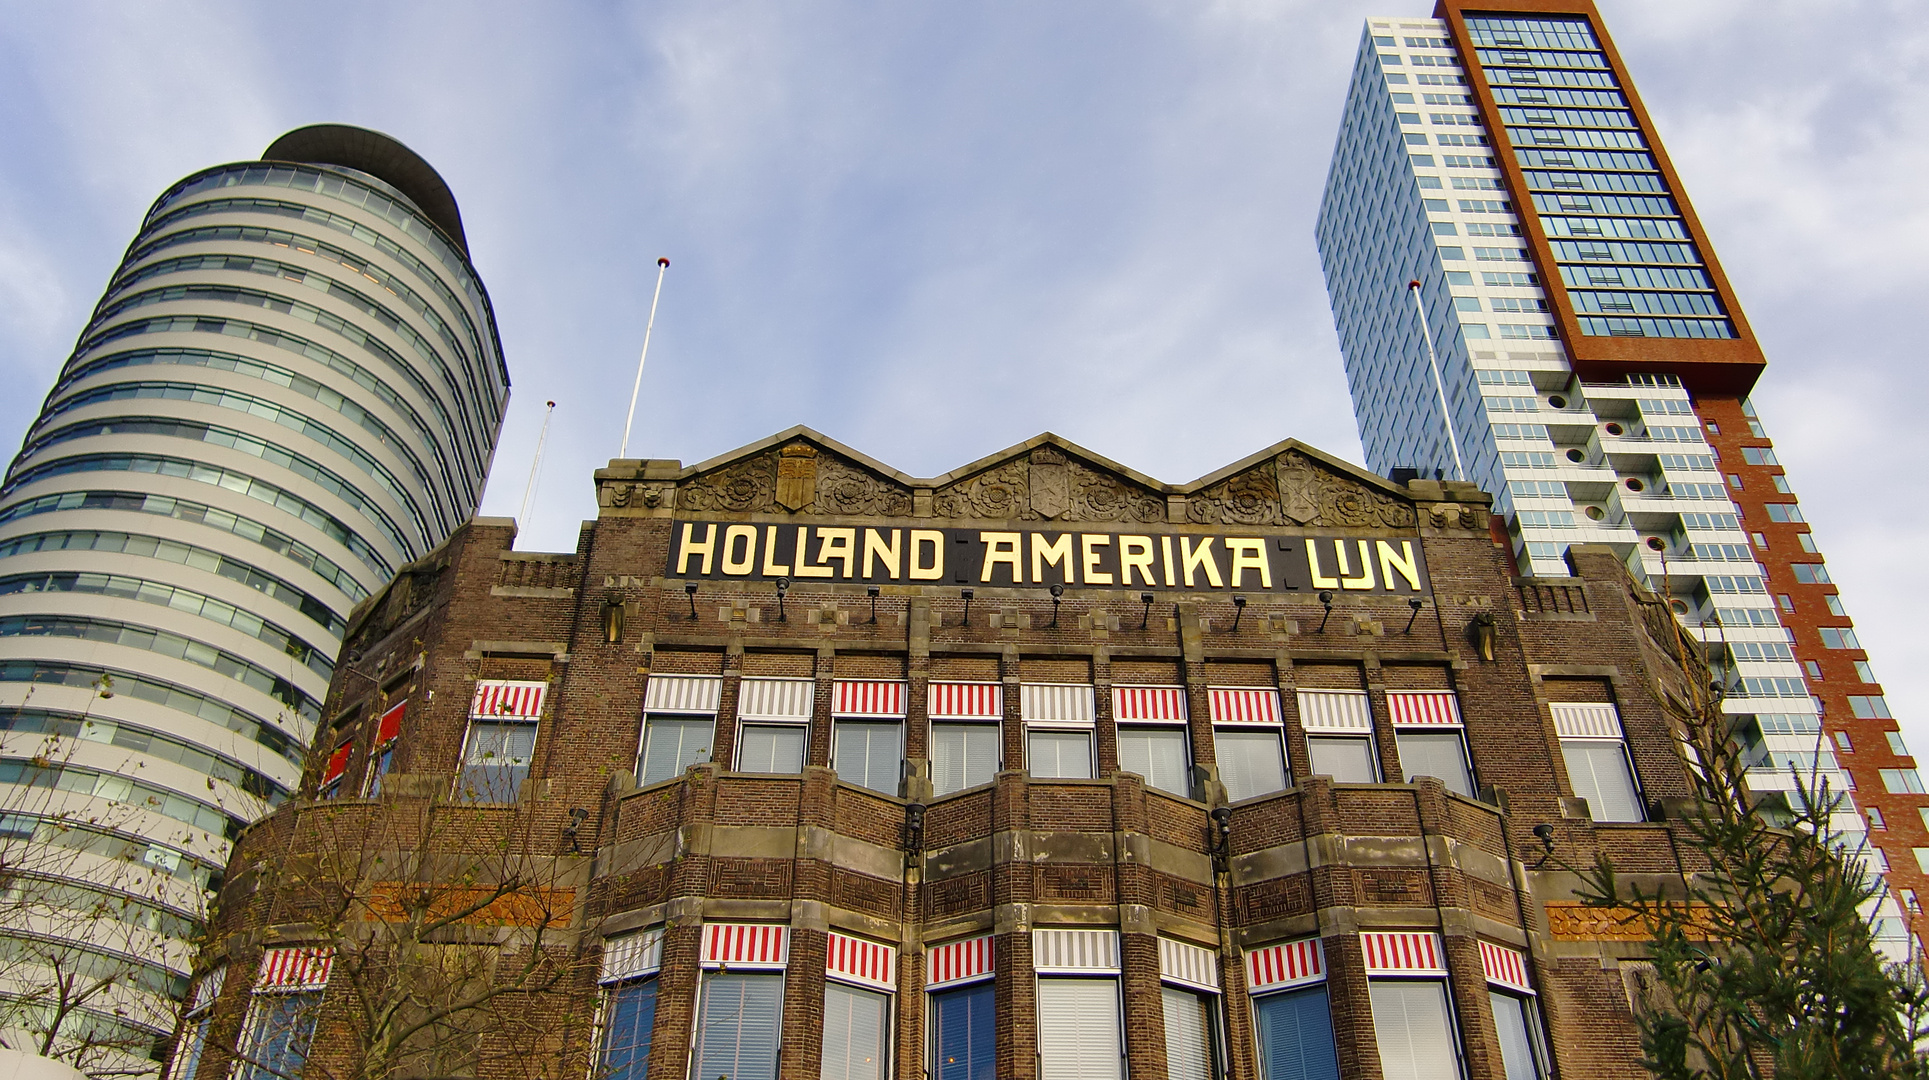 Hotel Holland Amerika Line, Rotterdam